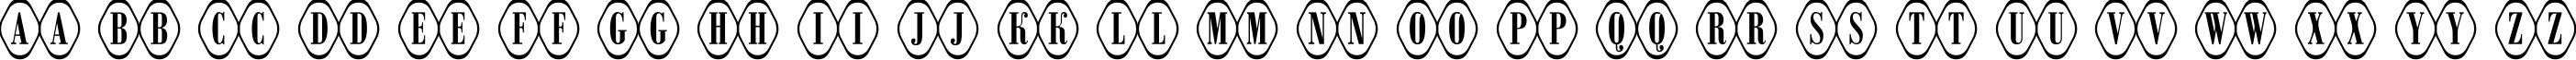 Пример написания английского алфавита шрифтом a_RombyRndOtl